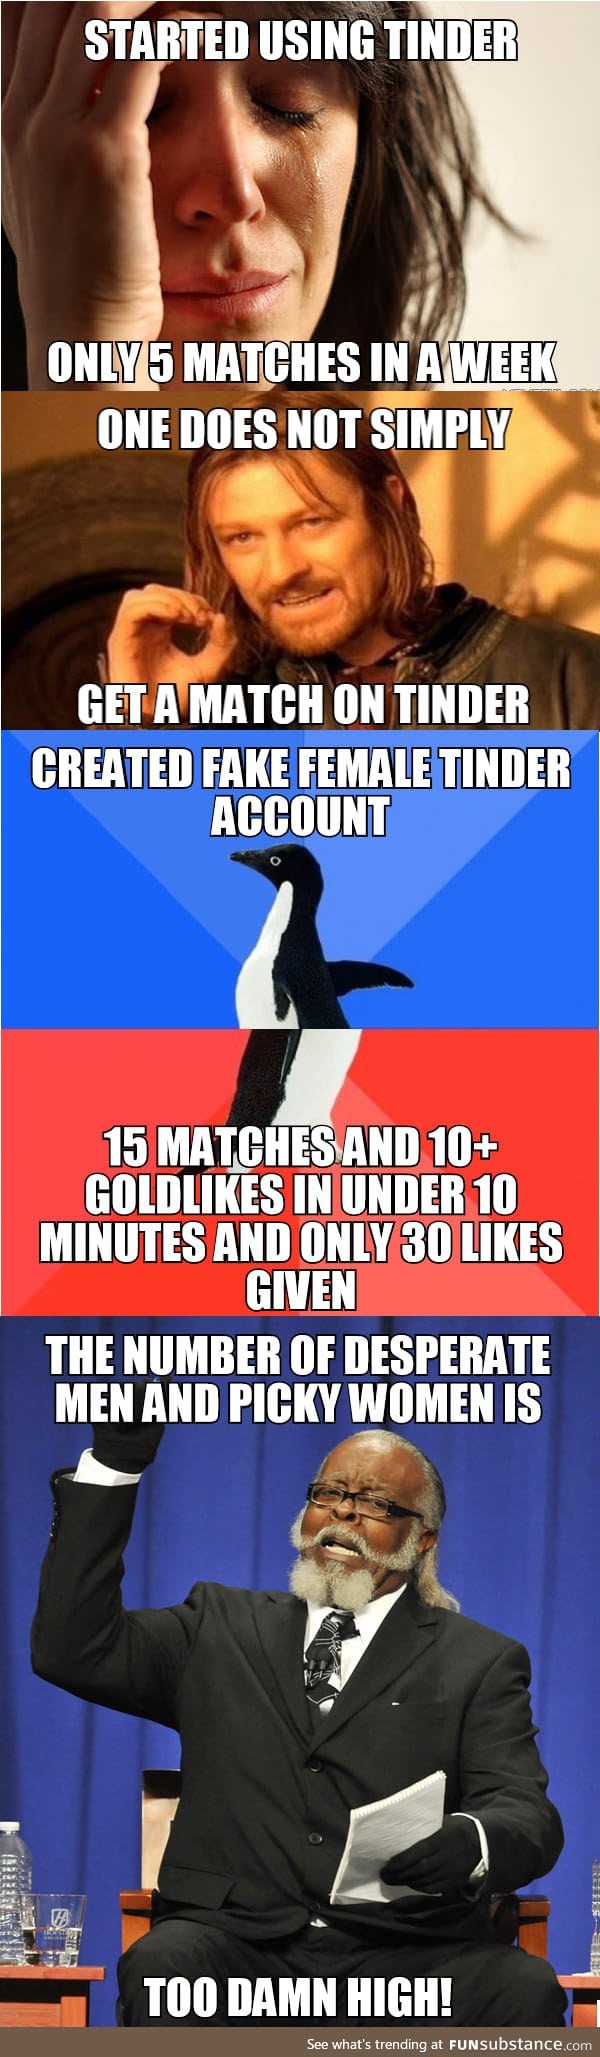 Does anyone here like Tinder?